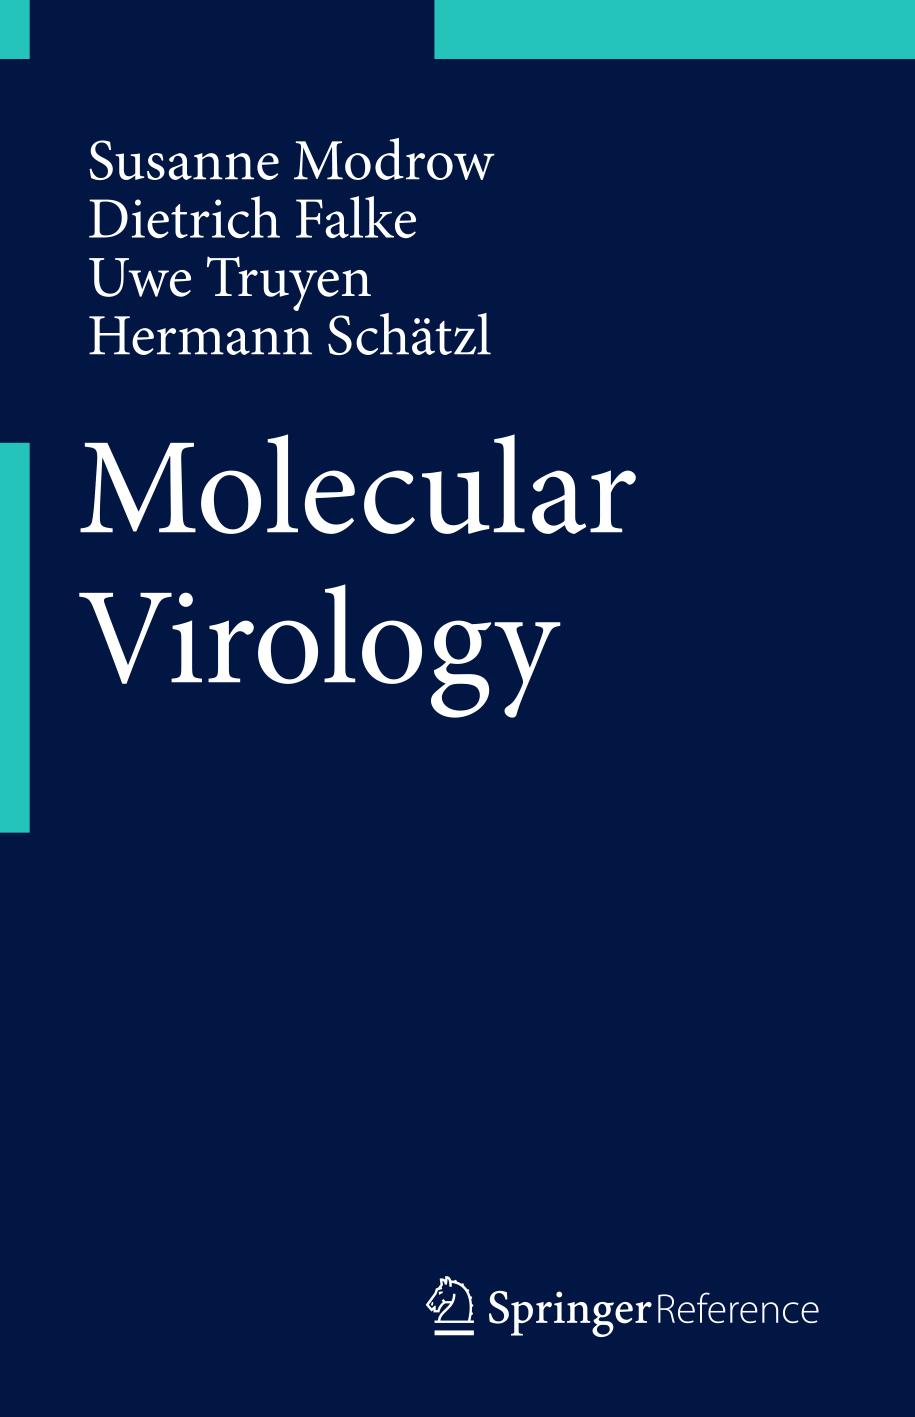 Molecular Virology